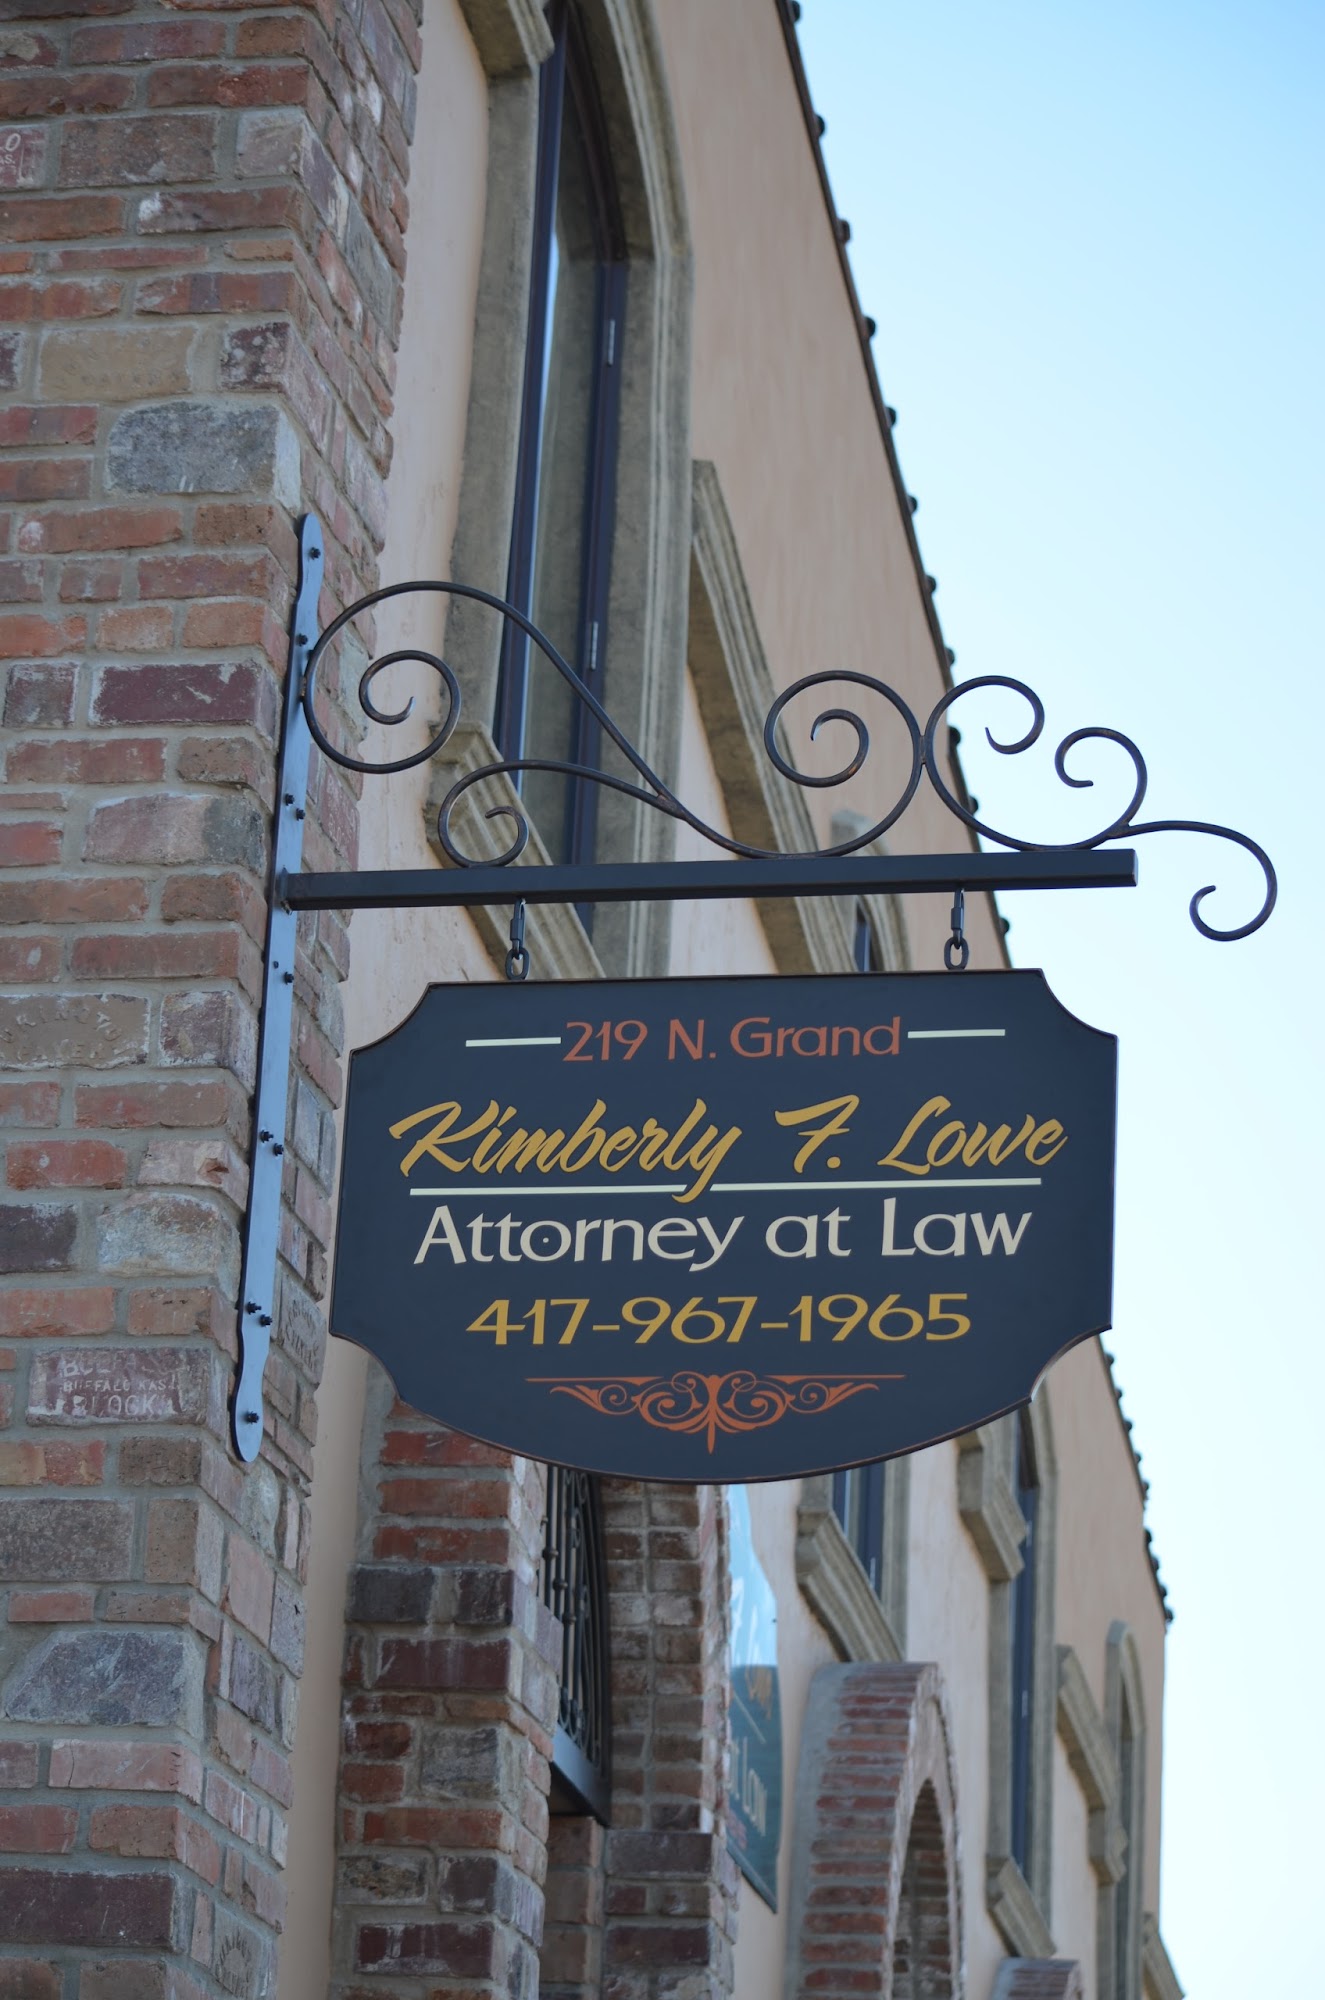 Kimberly F. Lowe, Attorney at Law 107 N Benton St, Waynesville Missouri 65583